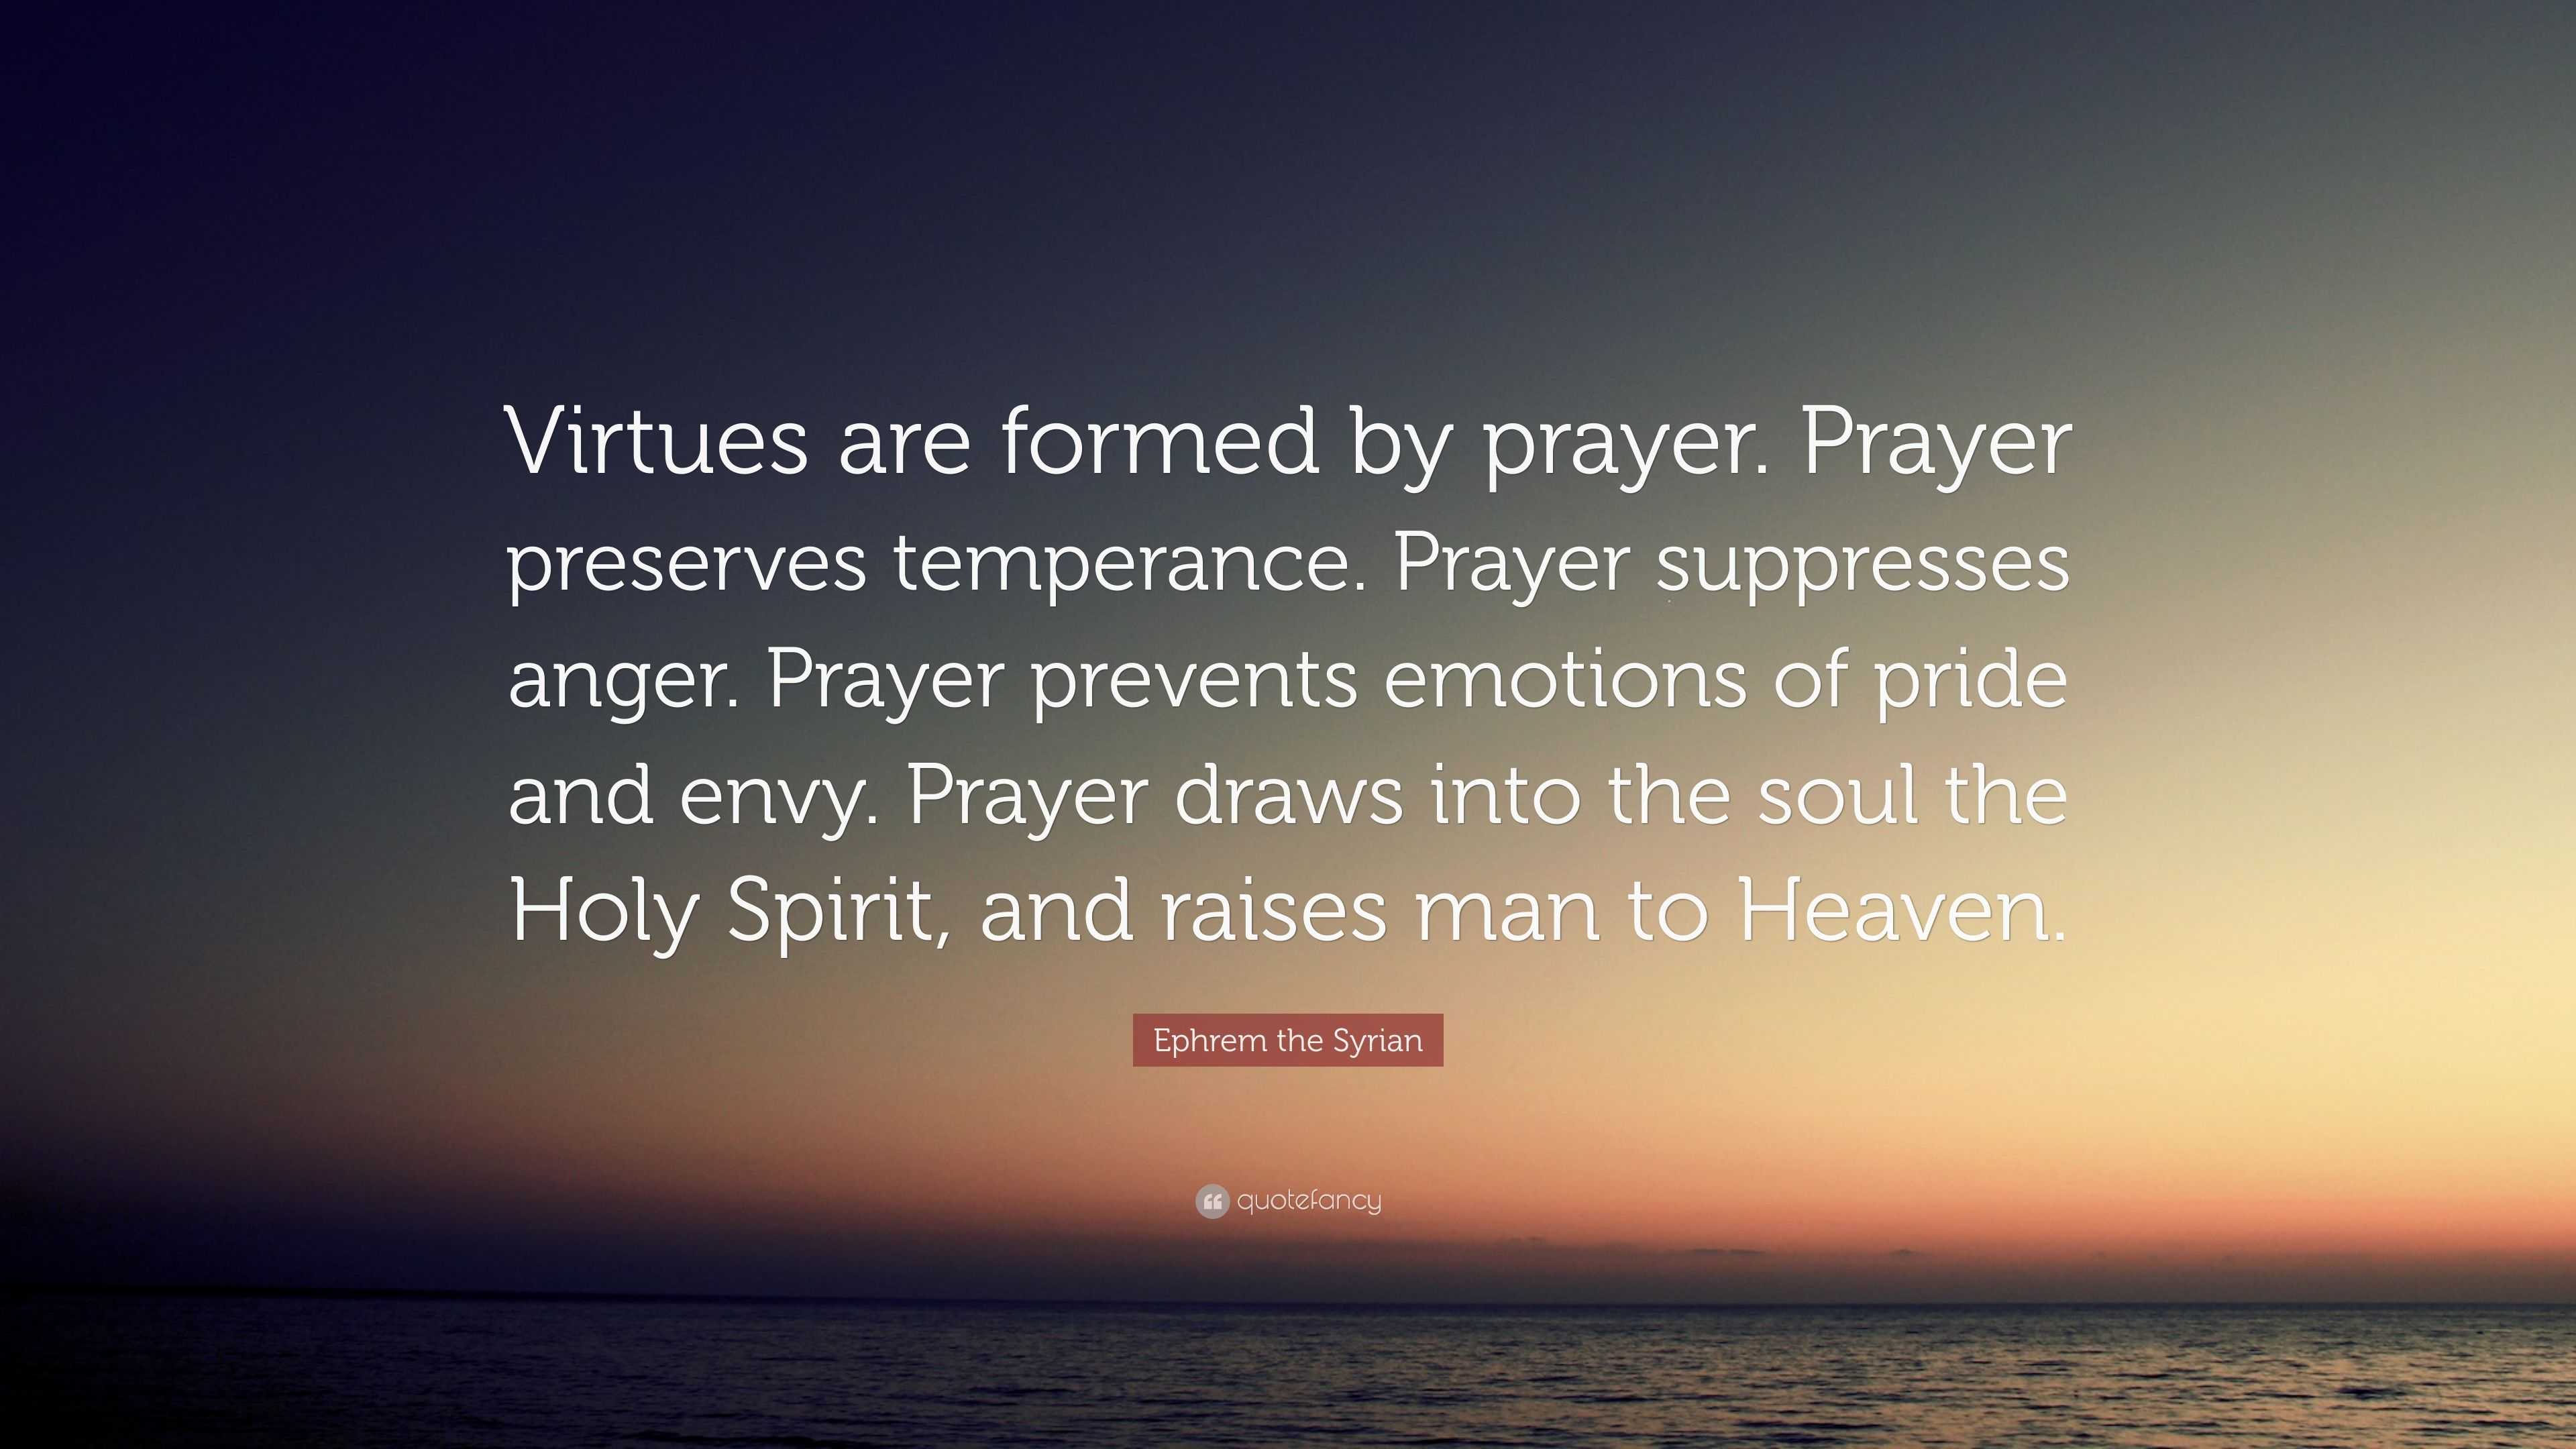 prayer against enemies of progress